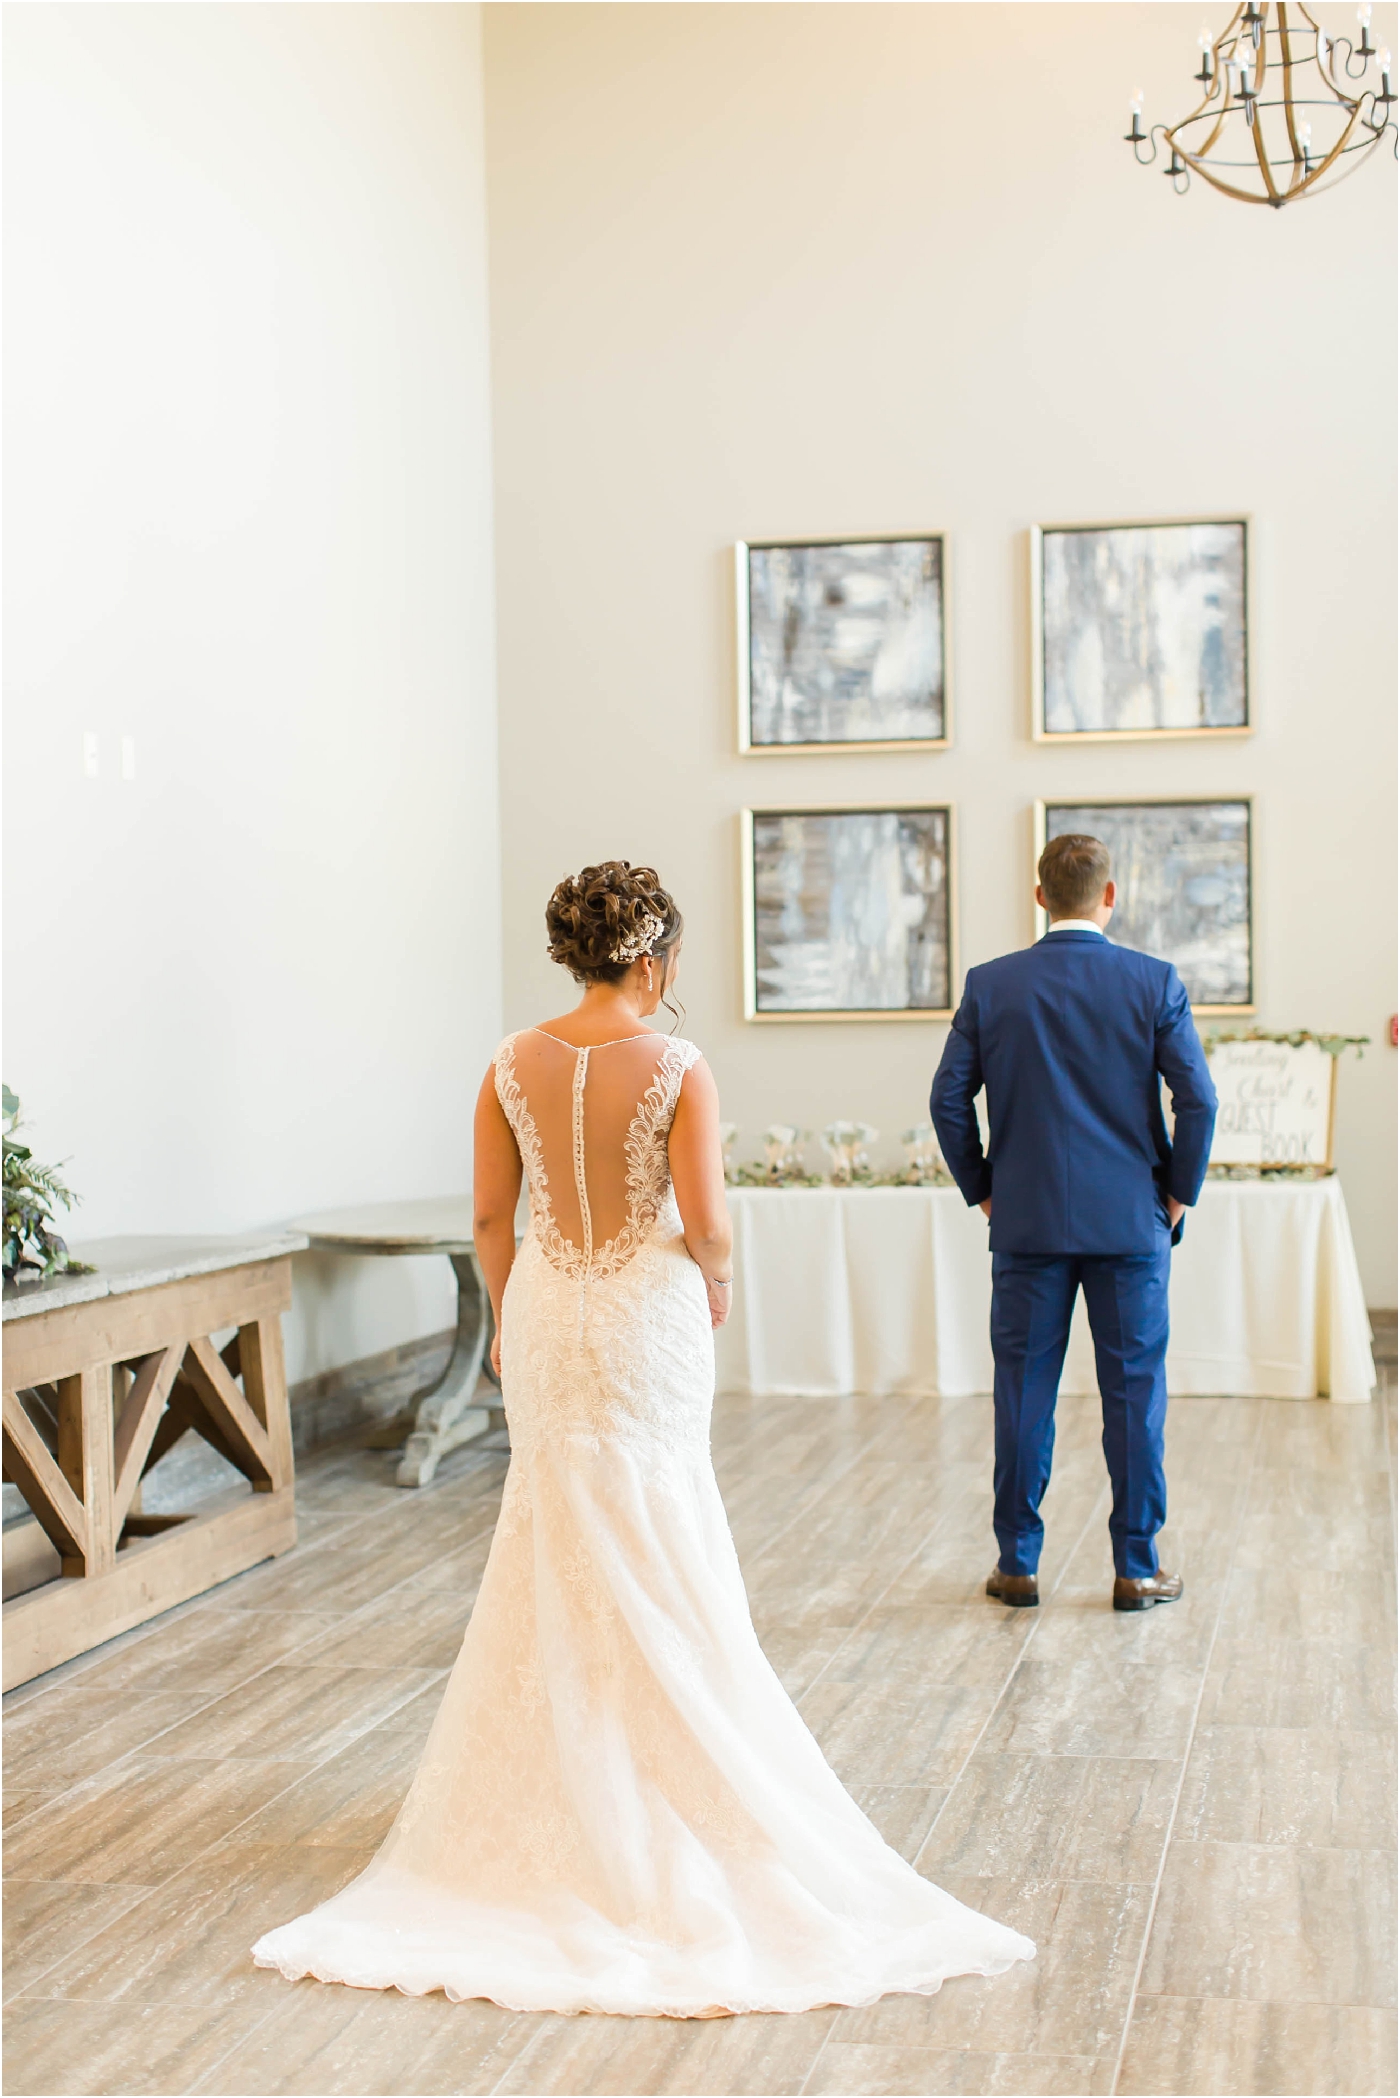 Encore Hall Wedding,Loren Jackson Photography,Photographer Akron Ohio,cleveland wedding photography,